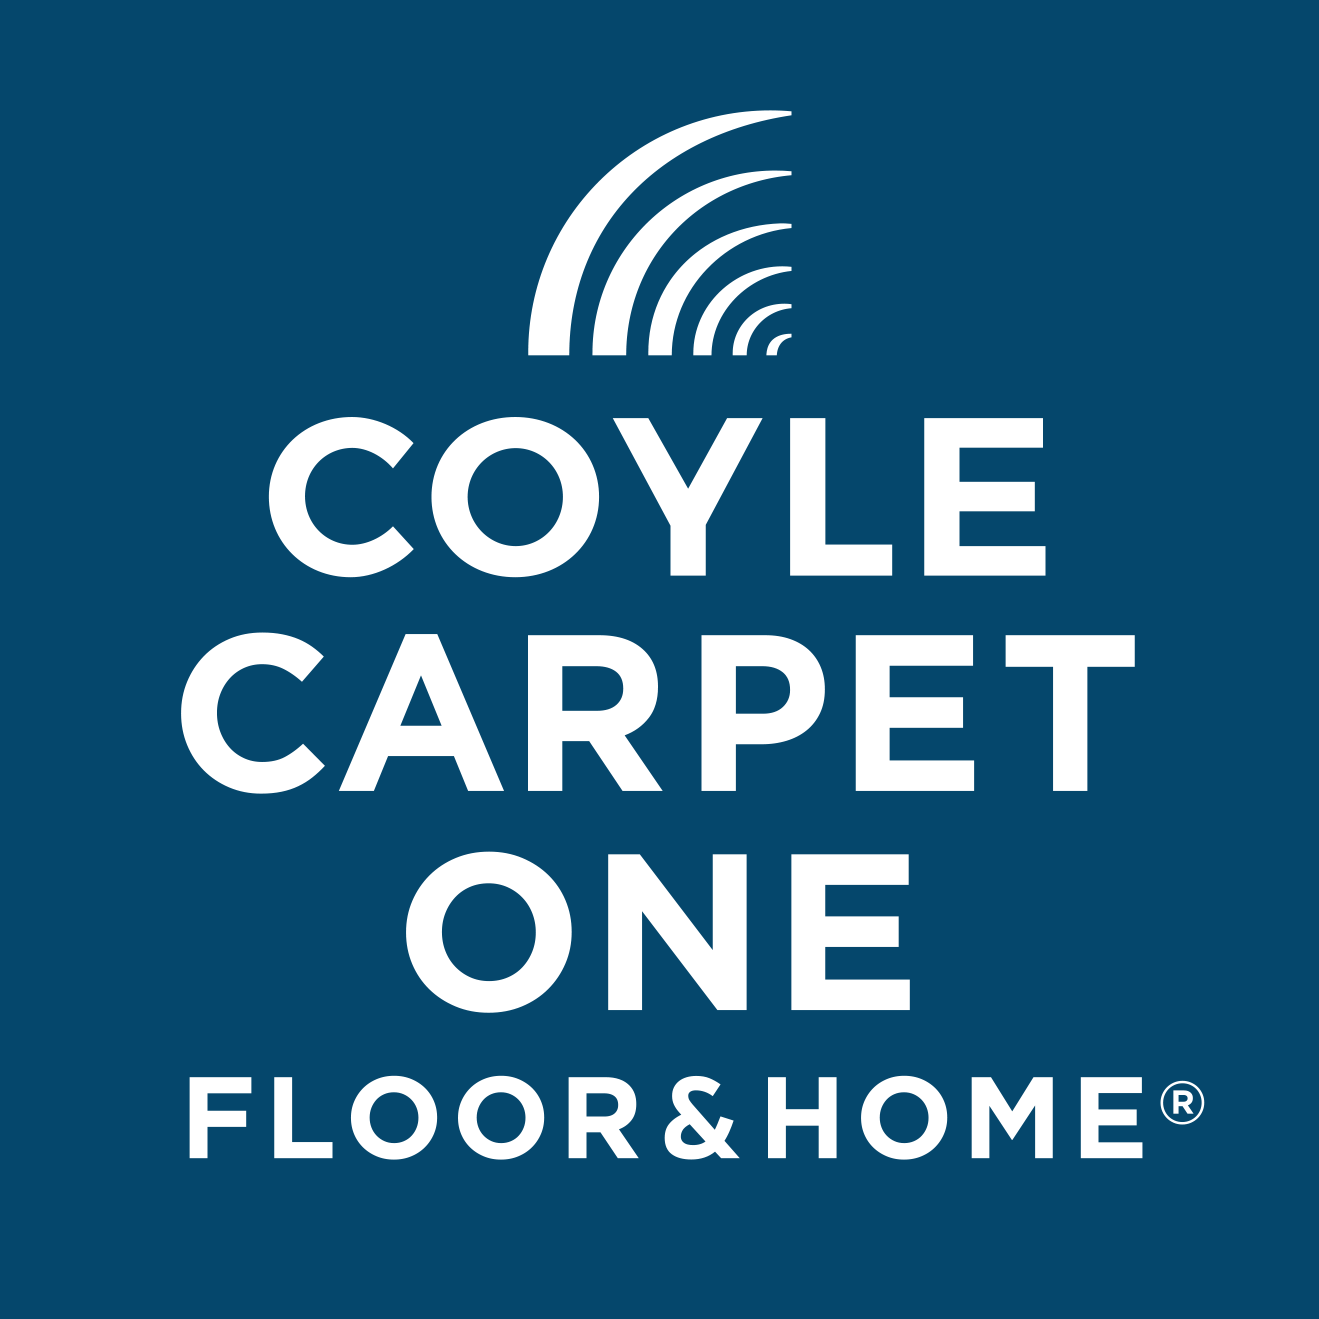 Coyle Carpet One Floor & Home - Coyle Carpet One Floor & Home